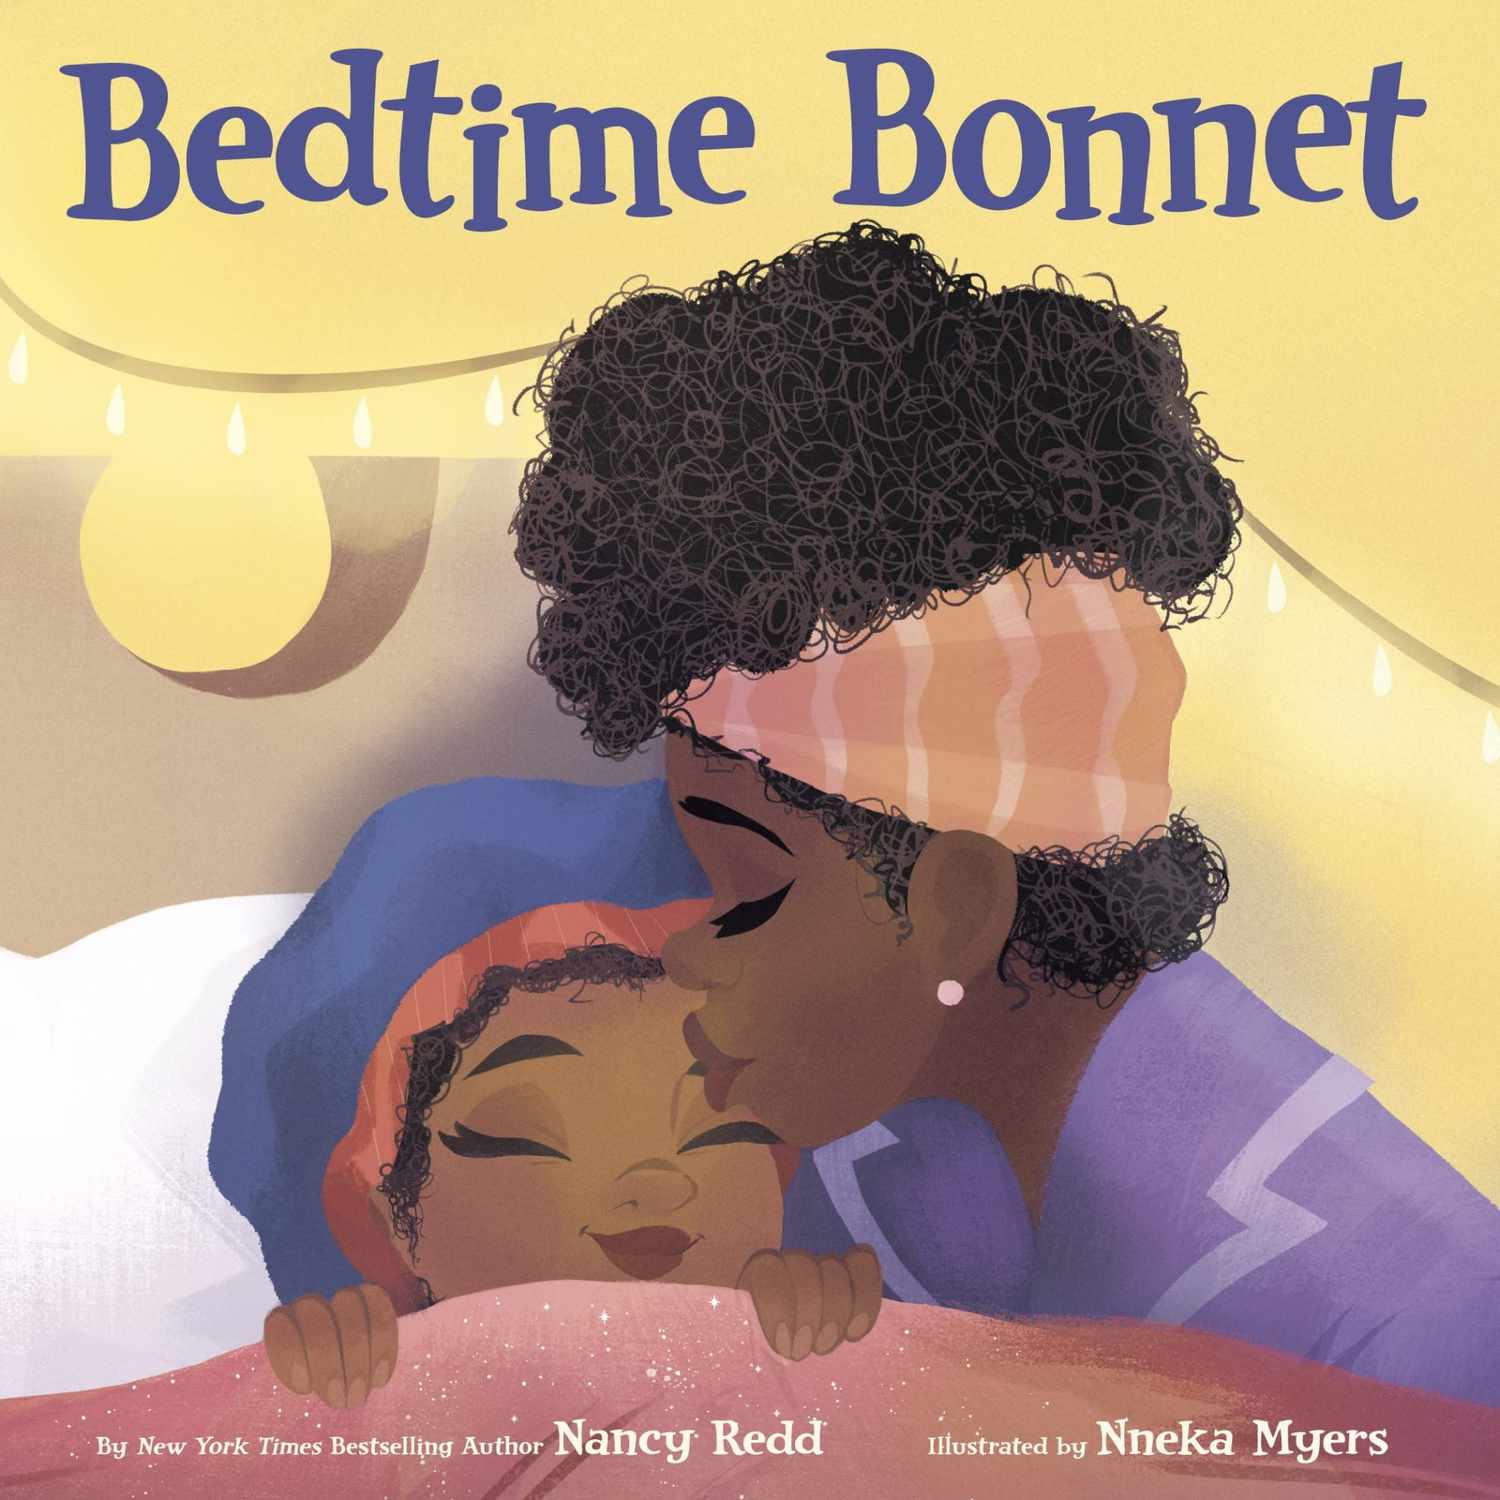 cover of children's book, "Bedtime Bonnet" by Nancy Redd